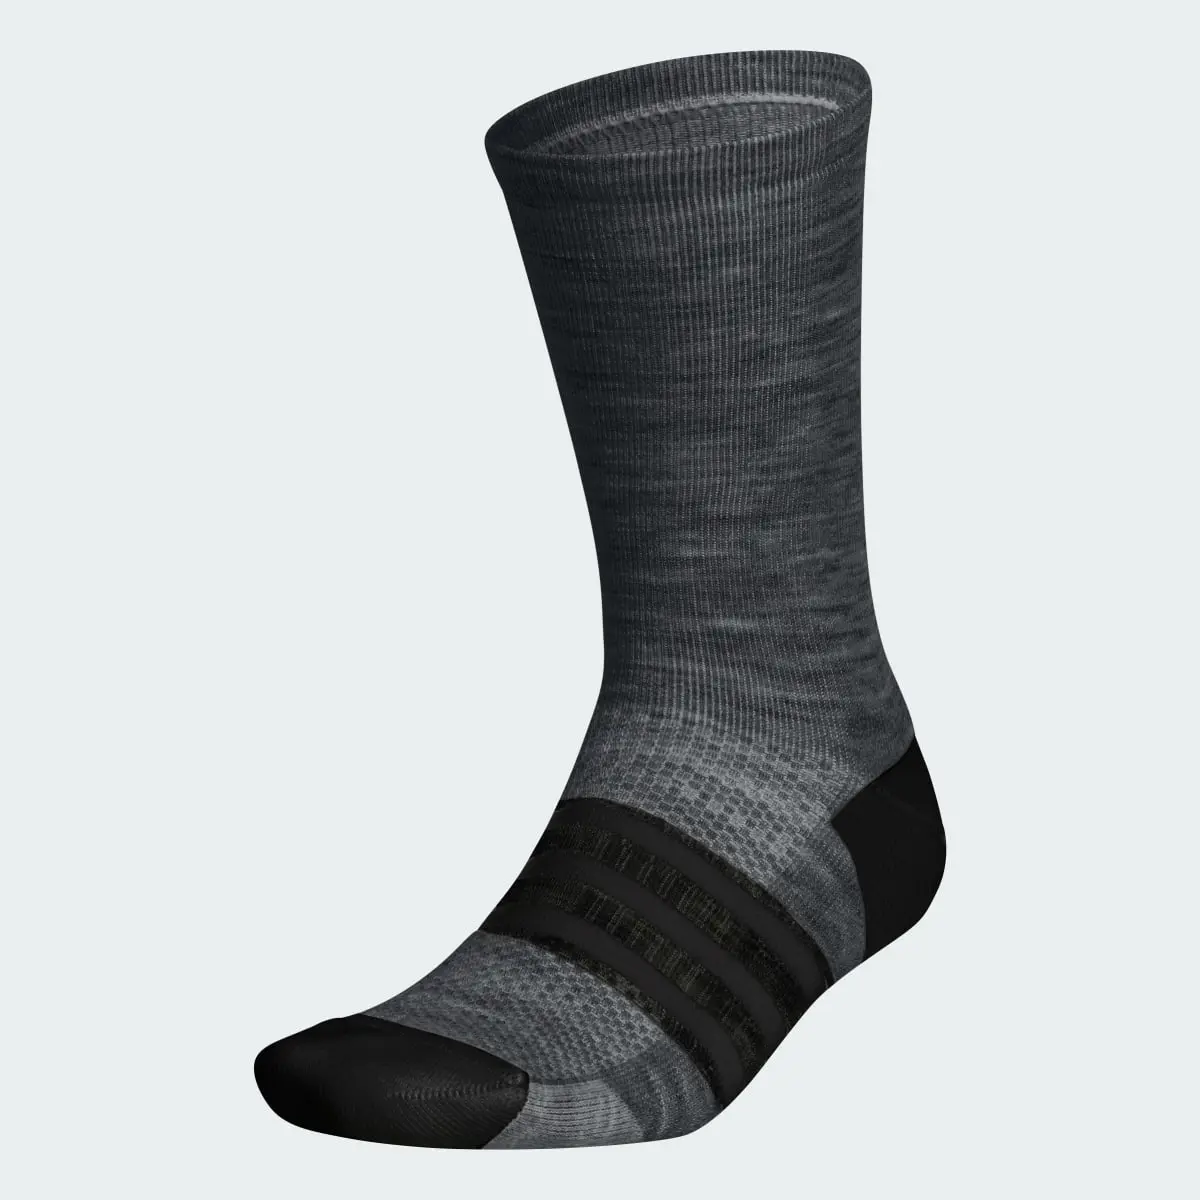 Adidas Wool Crew Socks. 2